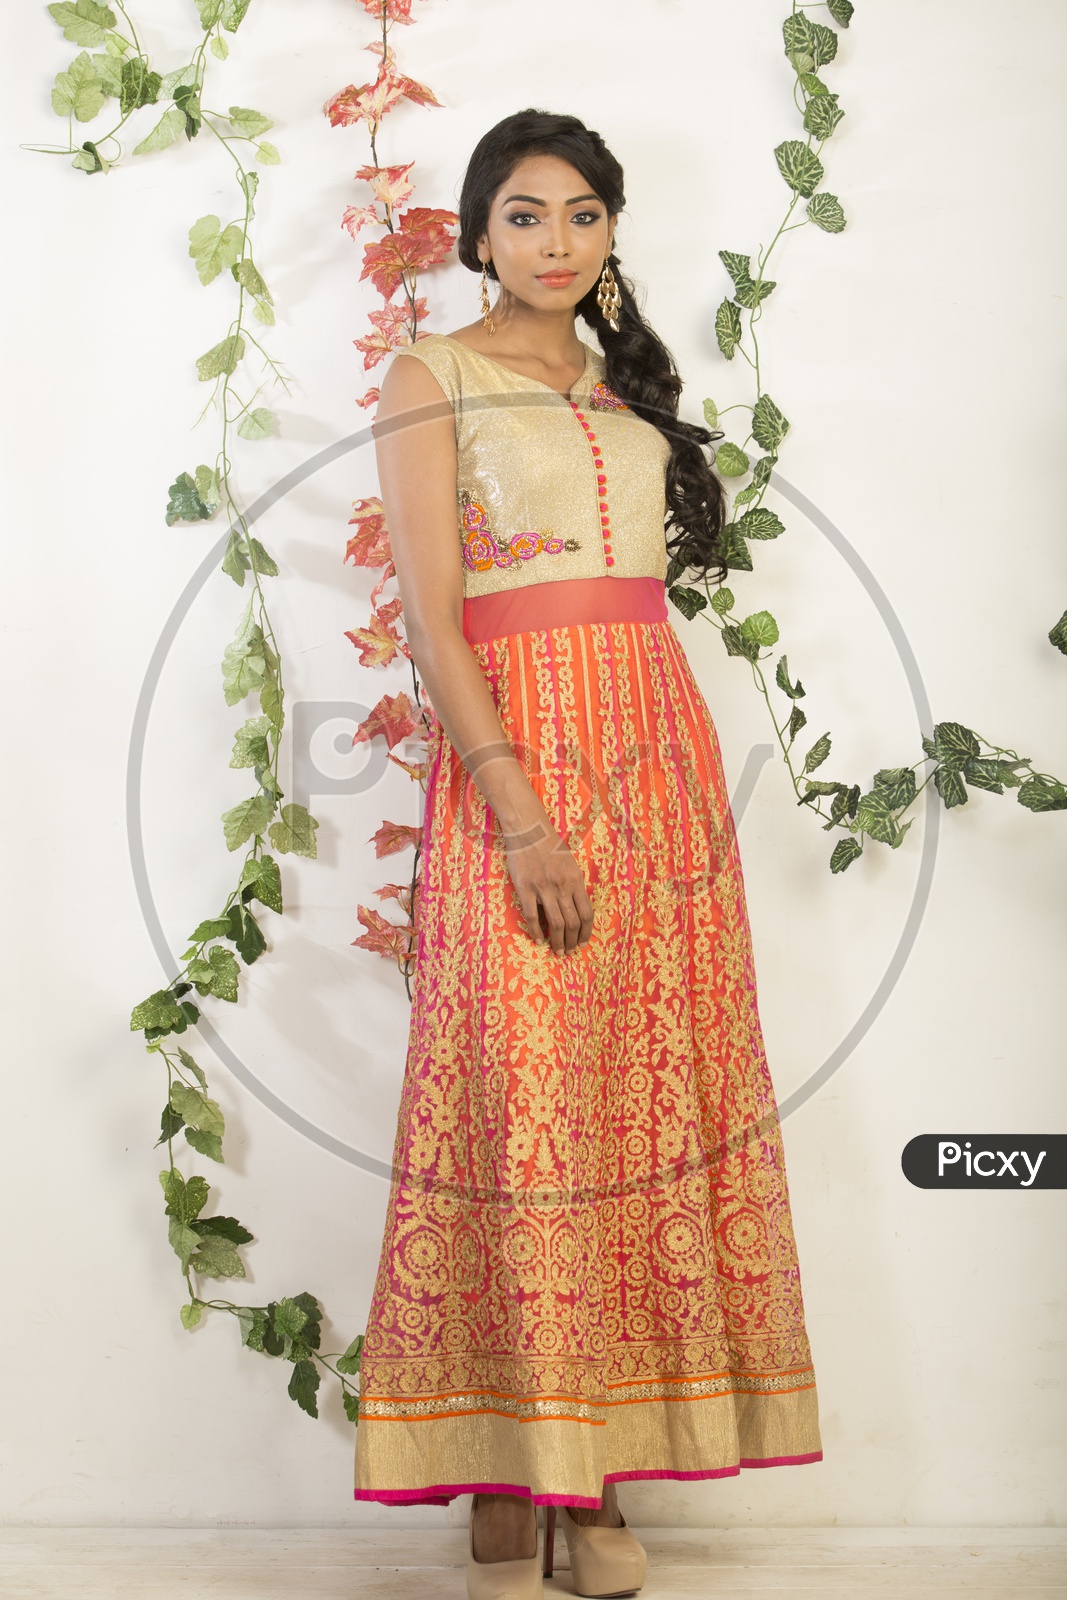 Indian girl dressed up in orange dress portrait in Studio Lighting / Traditionally dressed up girl